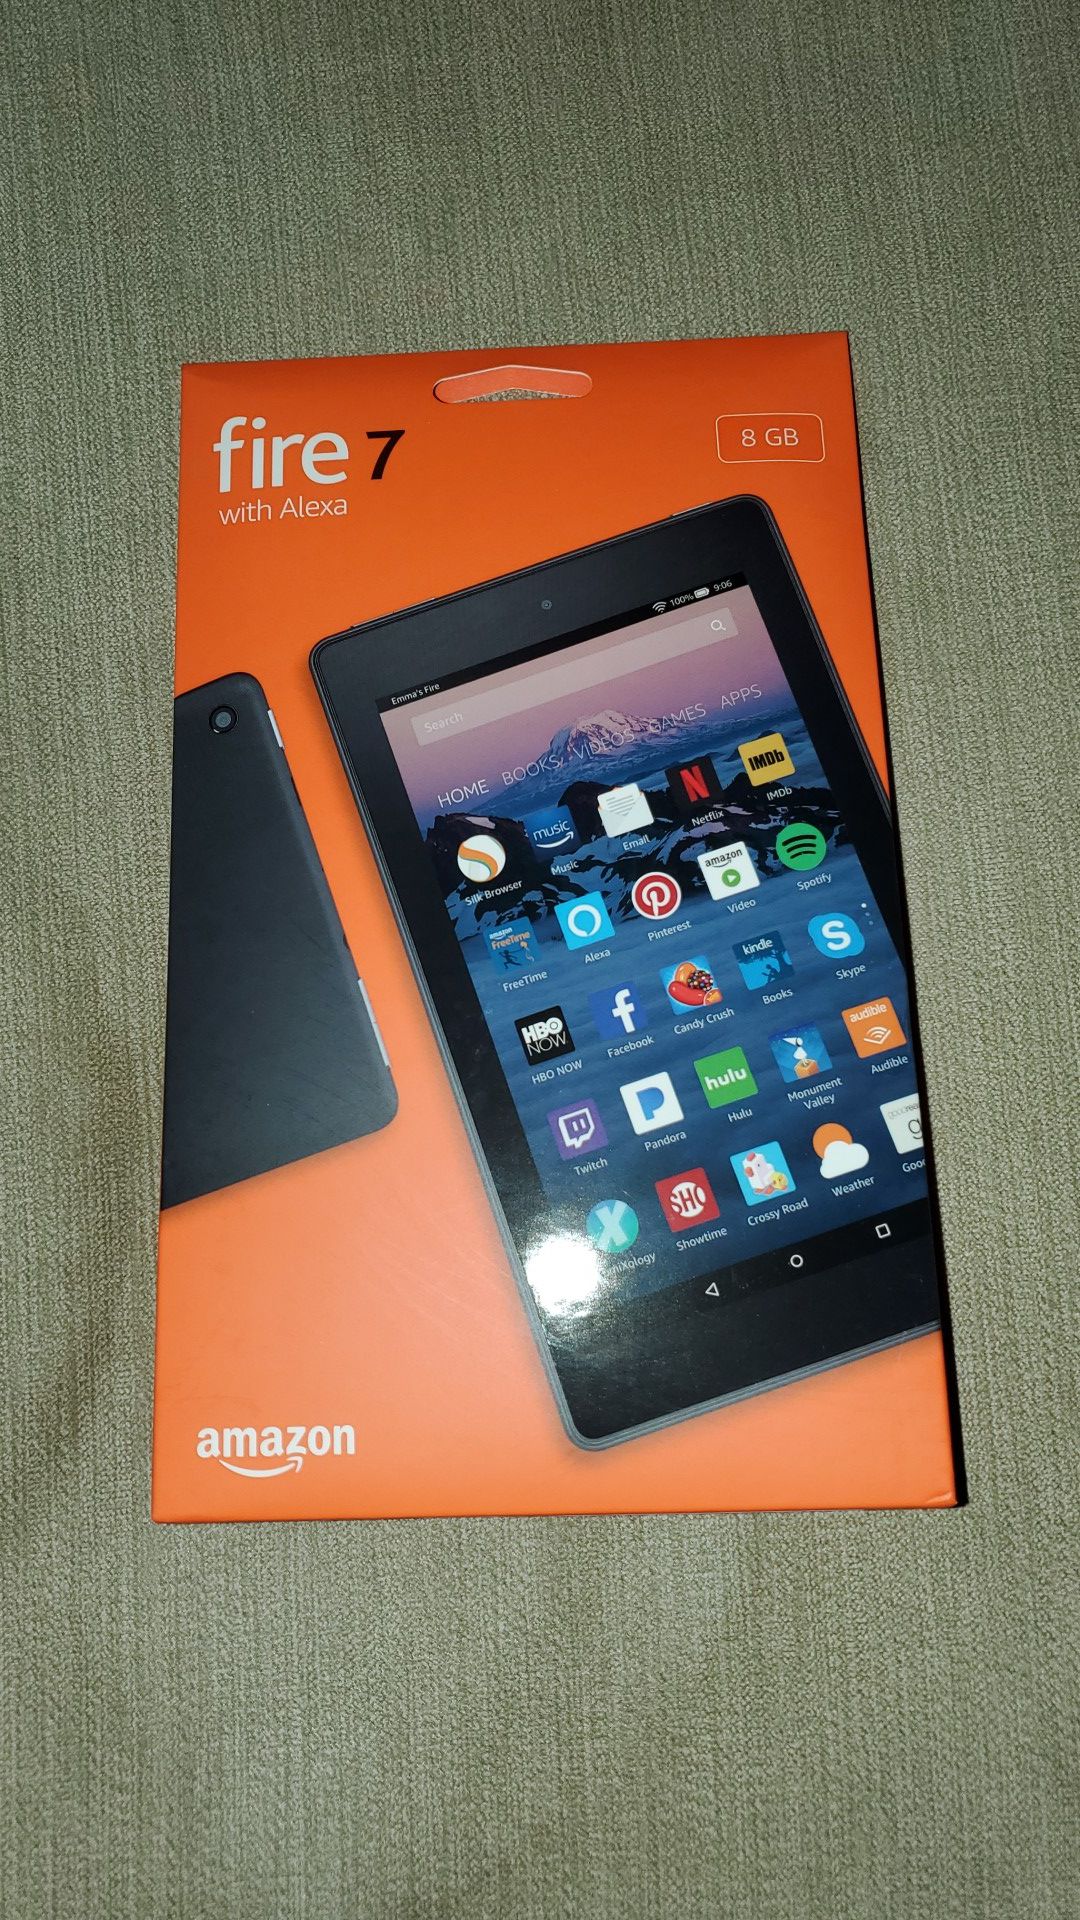 Amazon Fire 7 - Tablet with Alexa